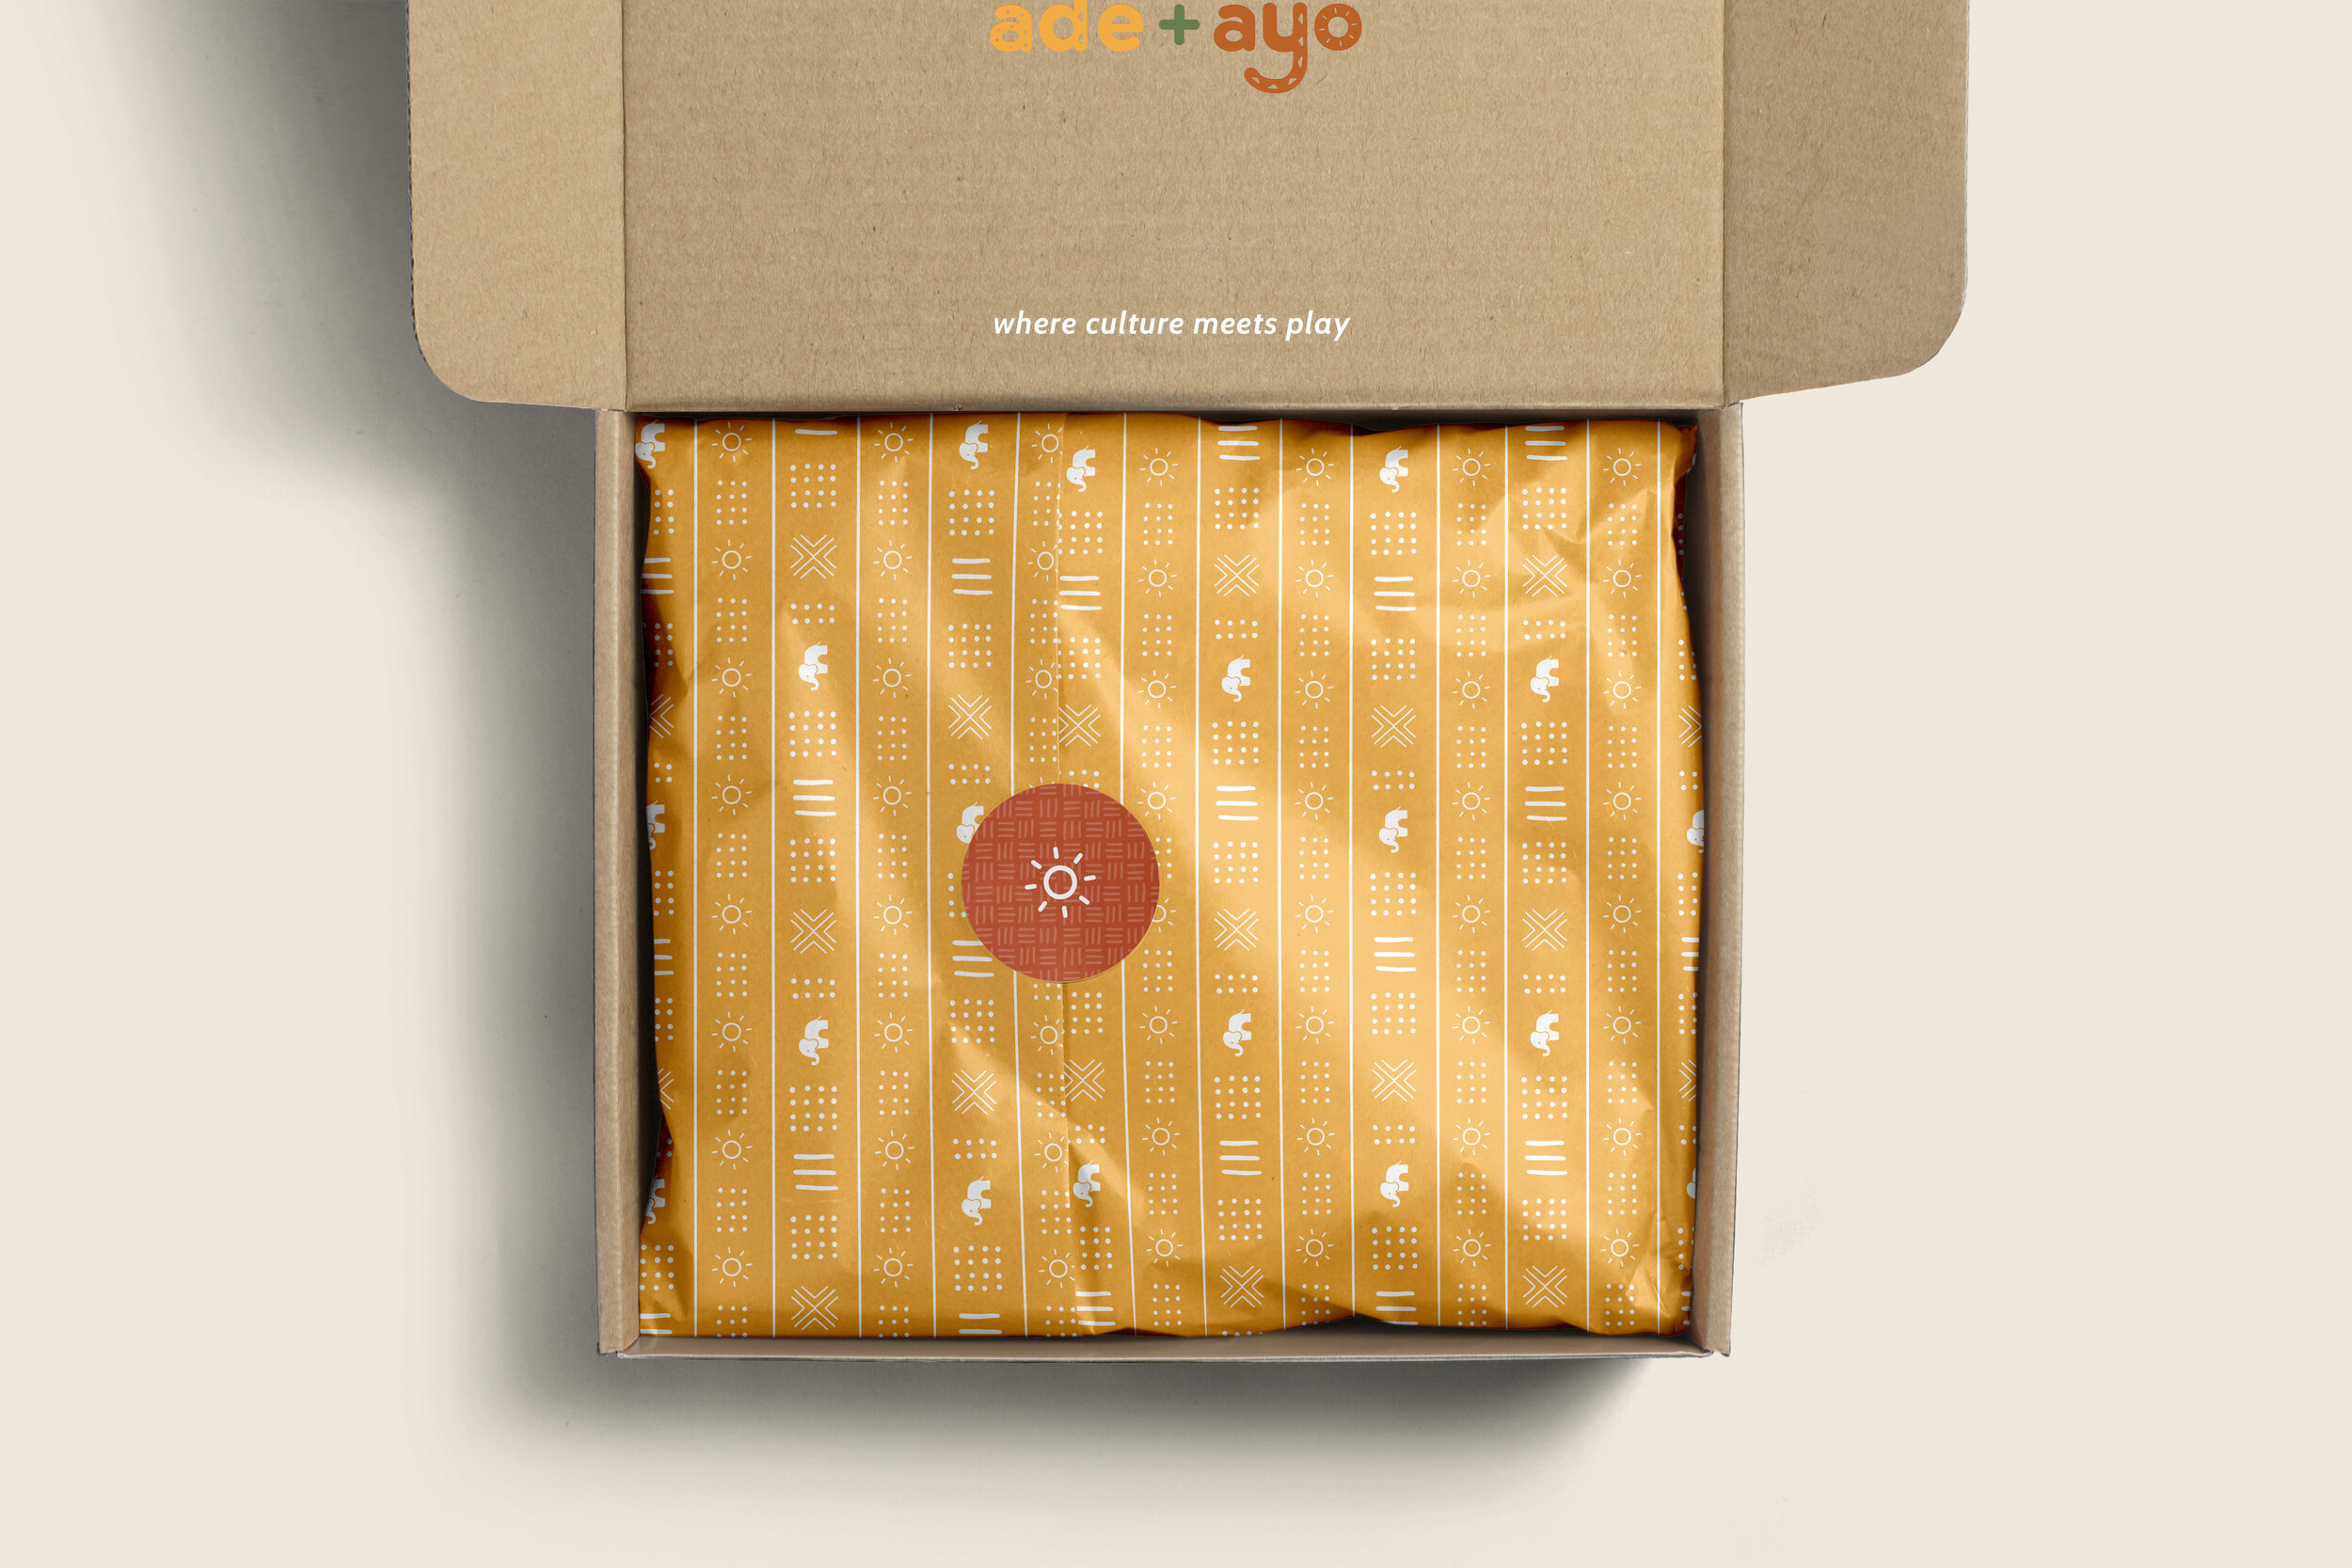 ade-ayo-tissue_package_box-2.jpg